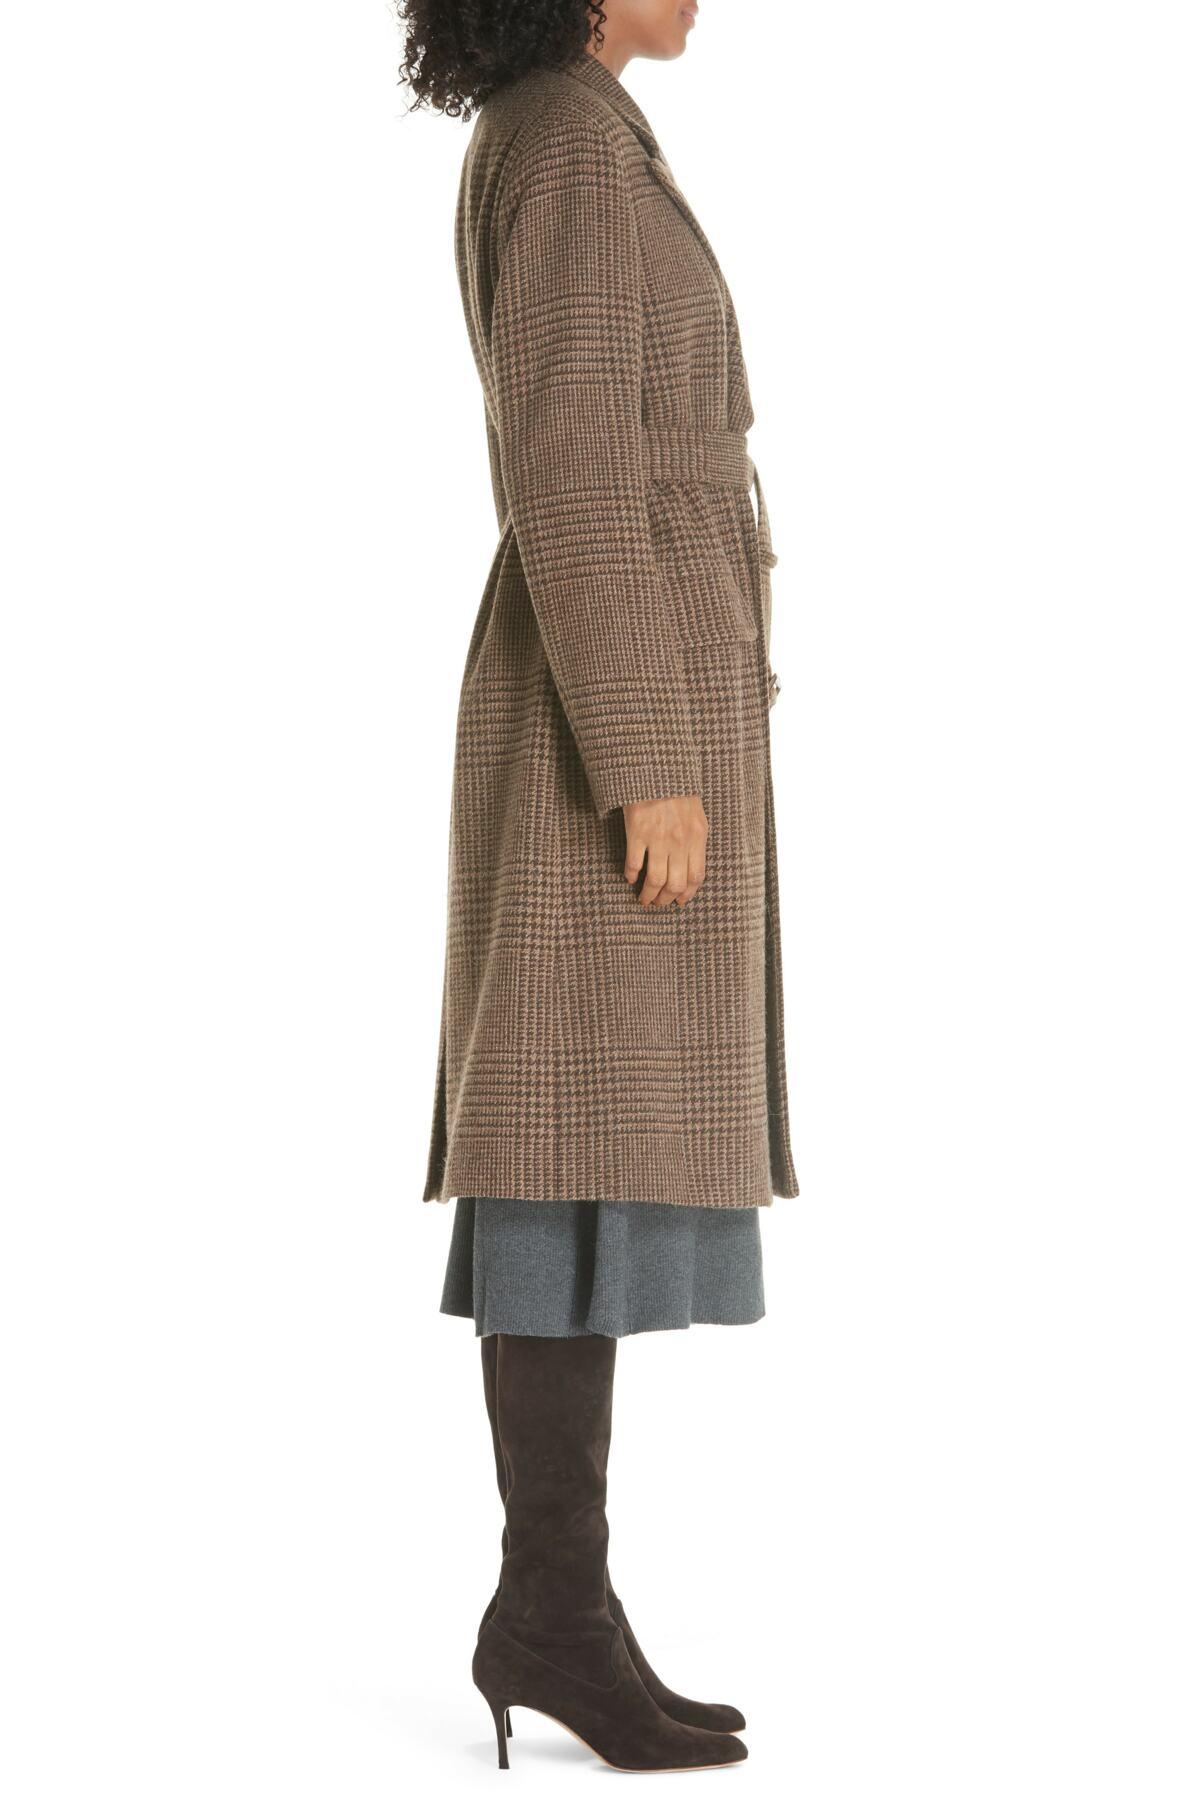 Polo Ralph Lauren Plaid Lambswool & Alpaca Belted Coat in Brown - Lyst